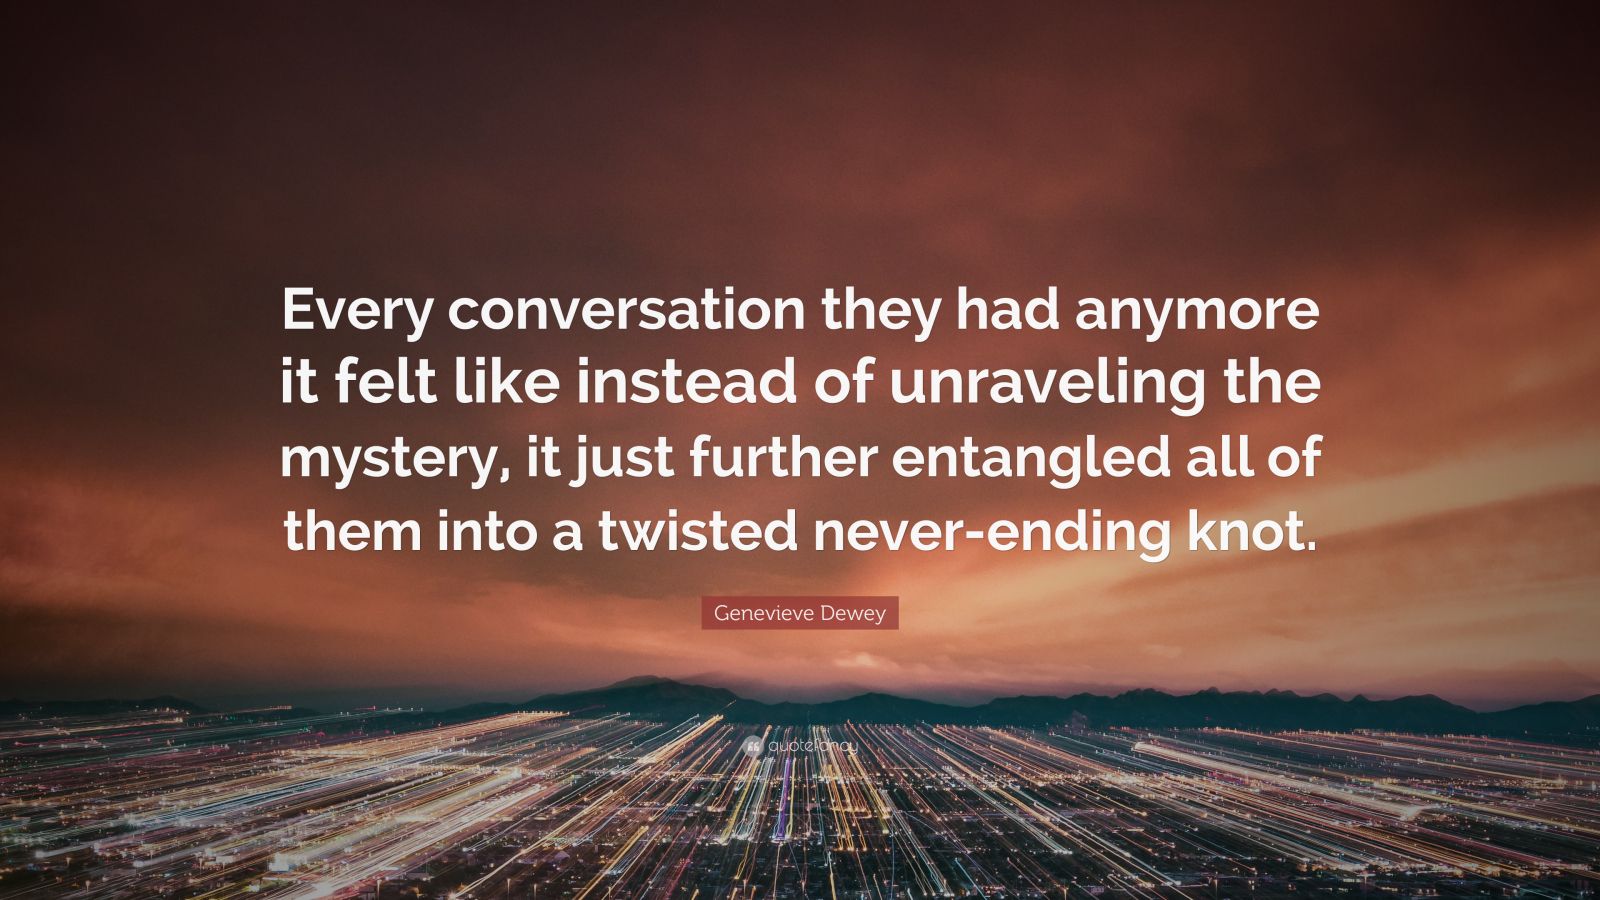 Genevieve Dewey Quote: “Every conversation they had anymore it felt ...